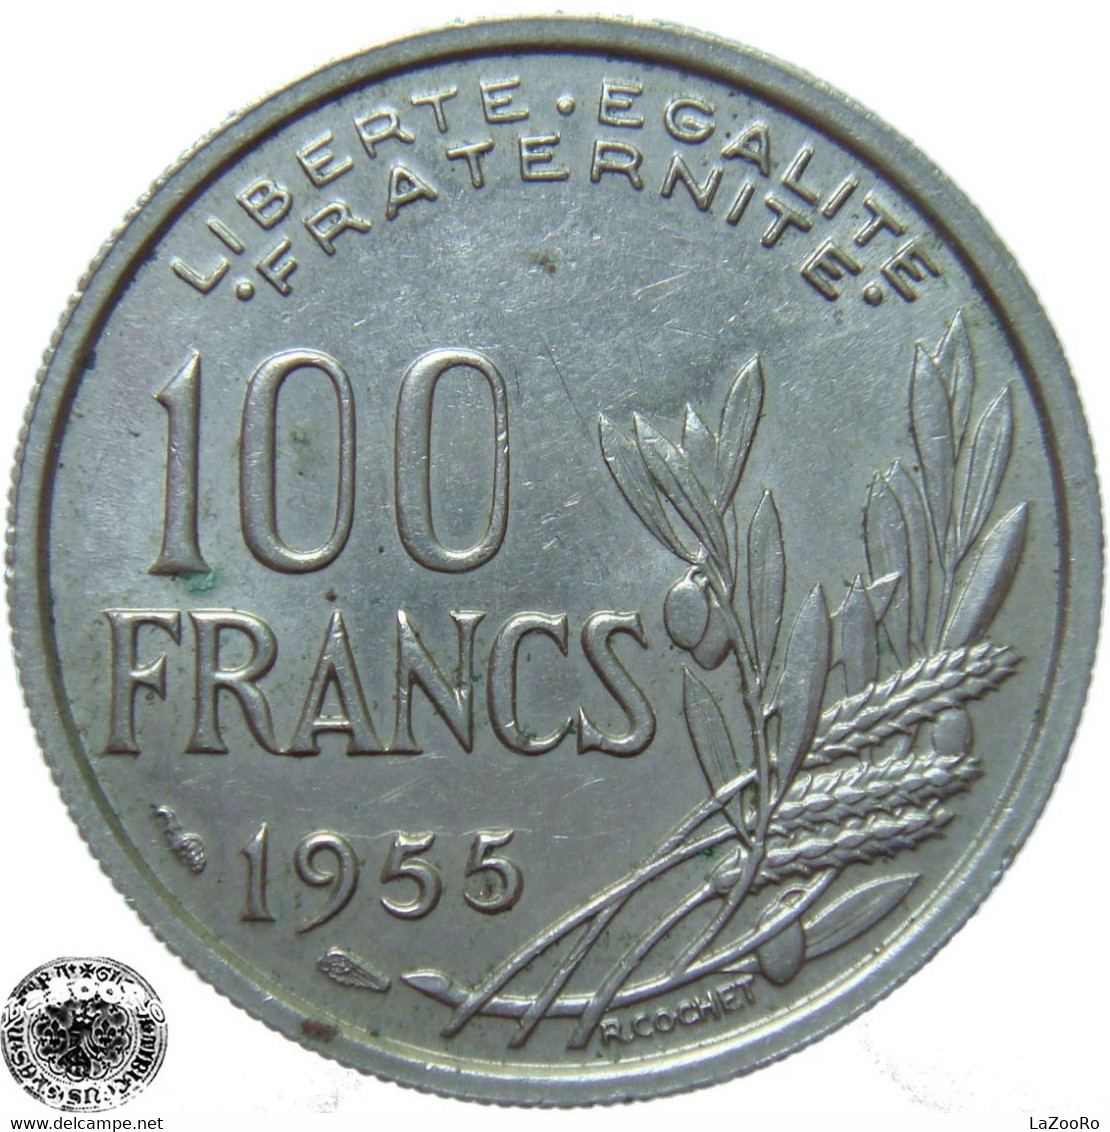 LaZooRo: France 100 Francs 1955 XF - 100 Francs